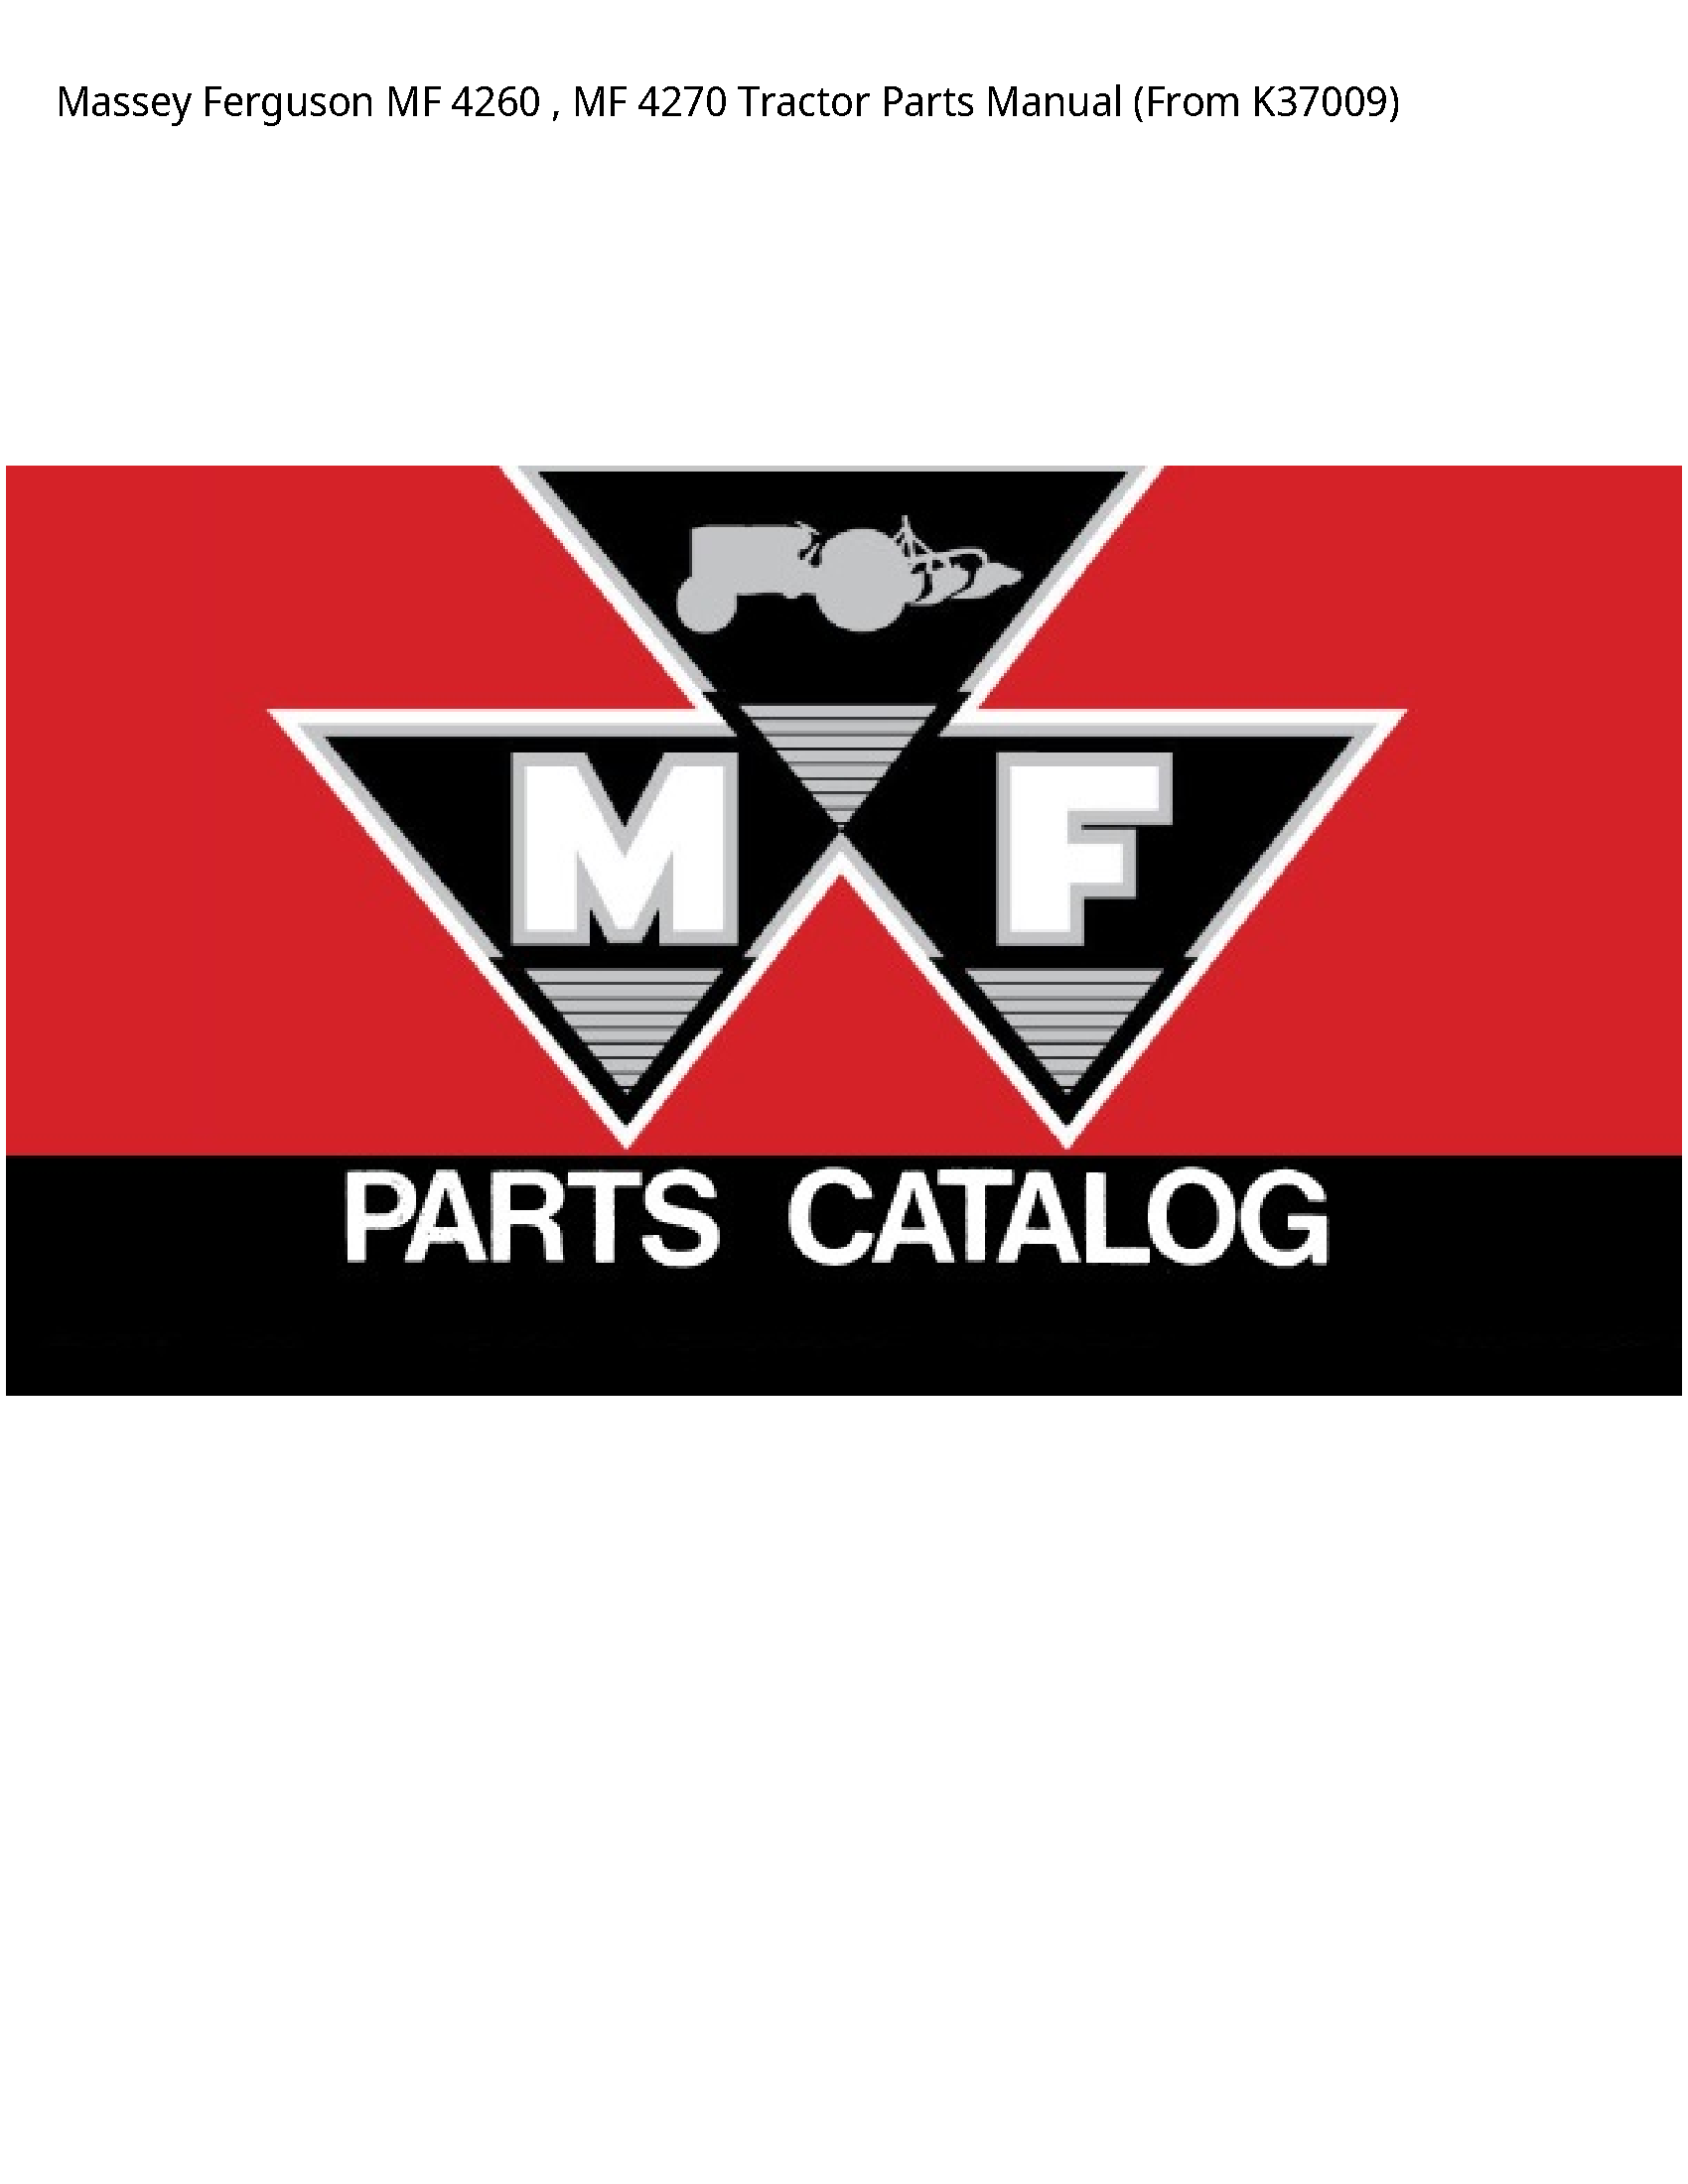 Massey Ferguson 4260 MF MF Tractor Parts manual